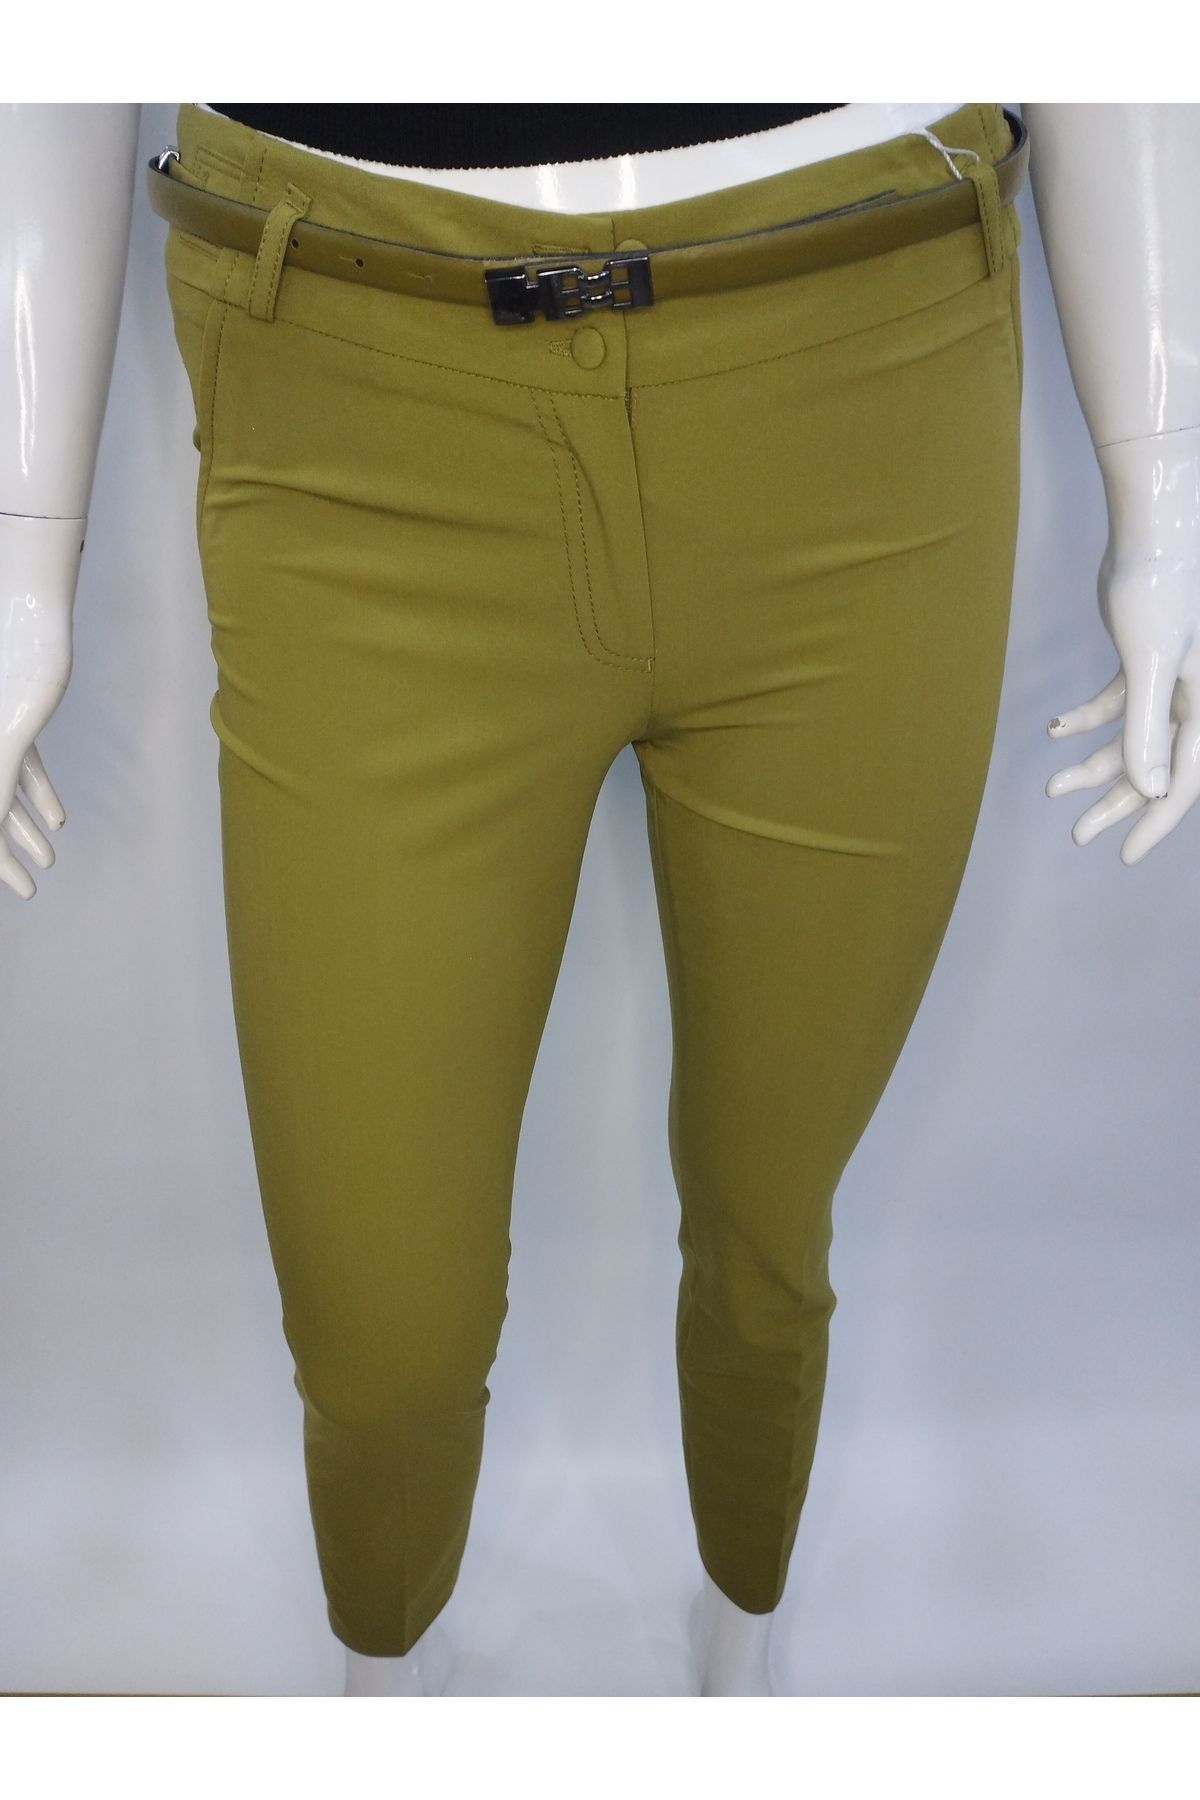 Lefon Kadın Düz Tokalı Cepli Pantolon - Su Yeşili Sarı